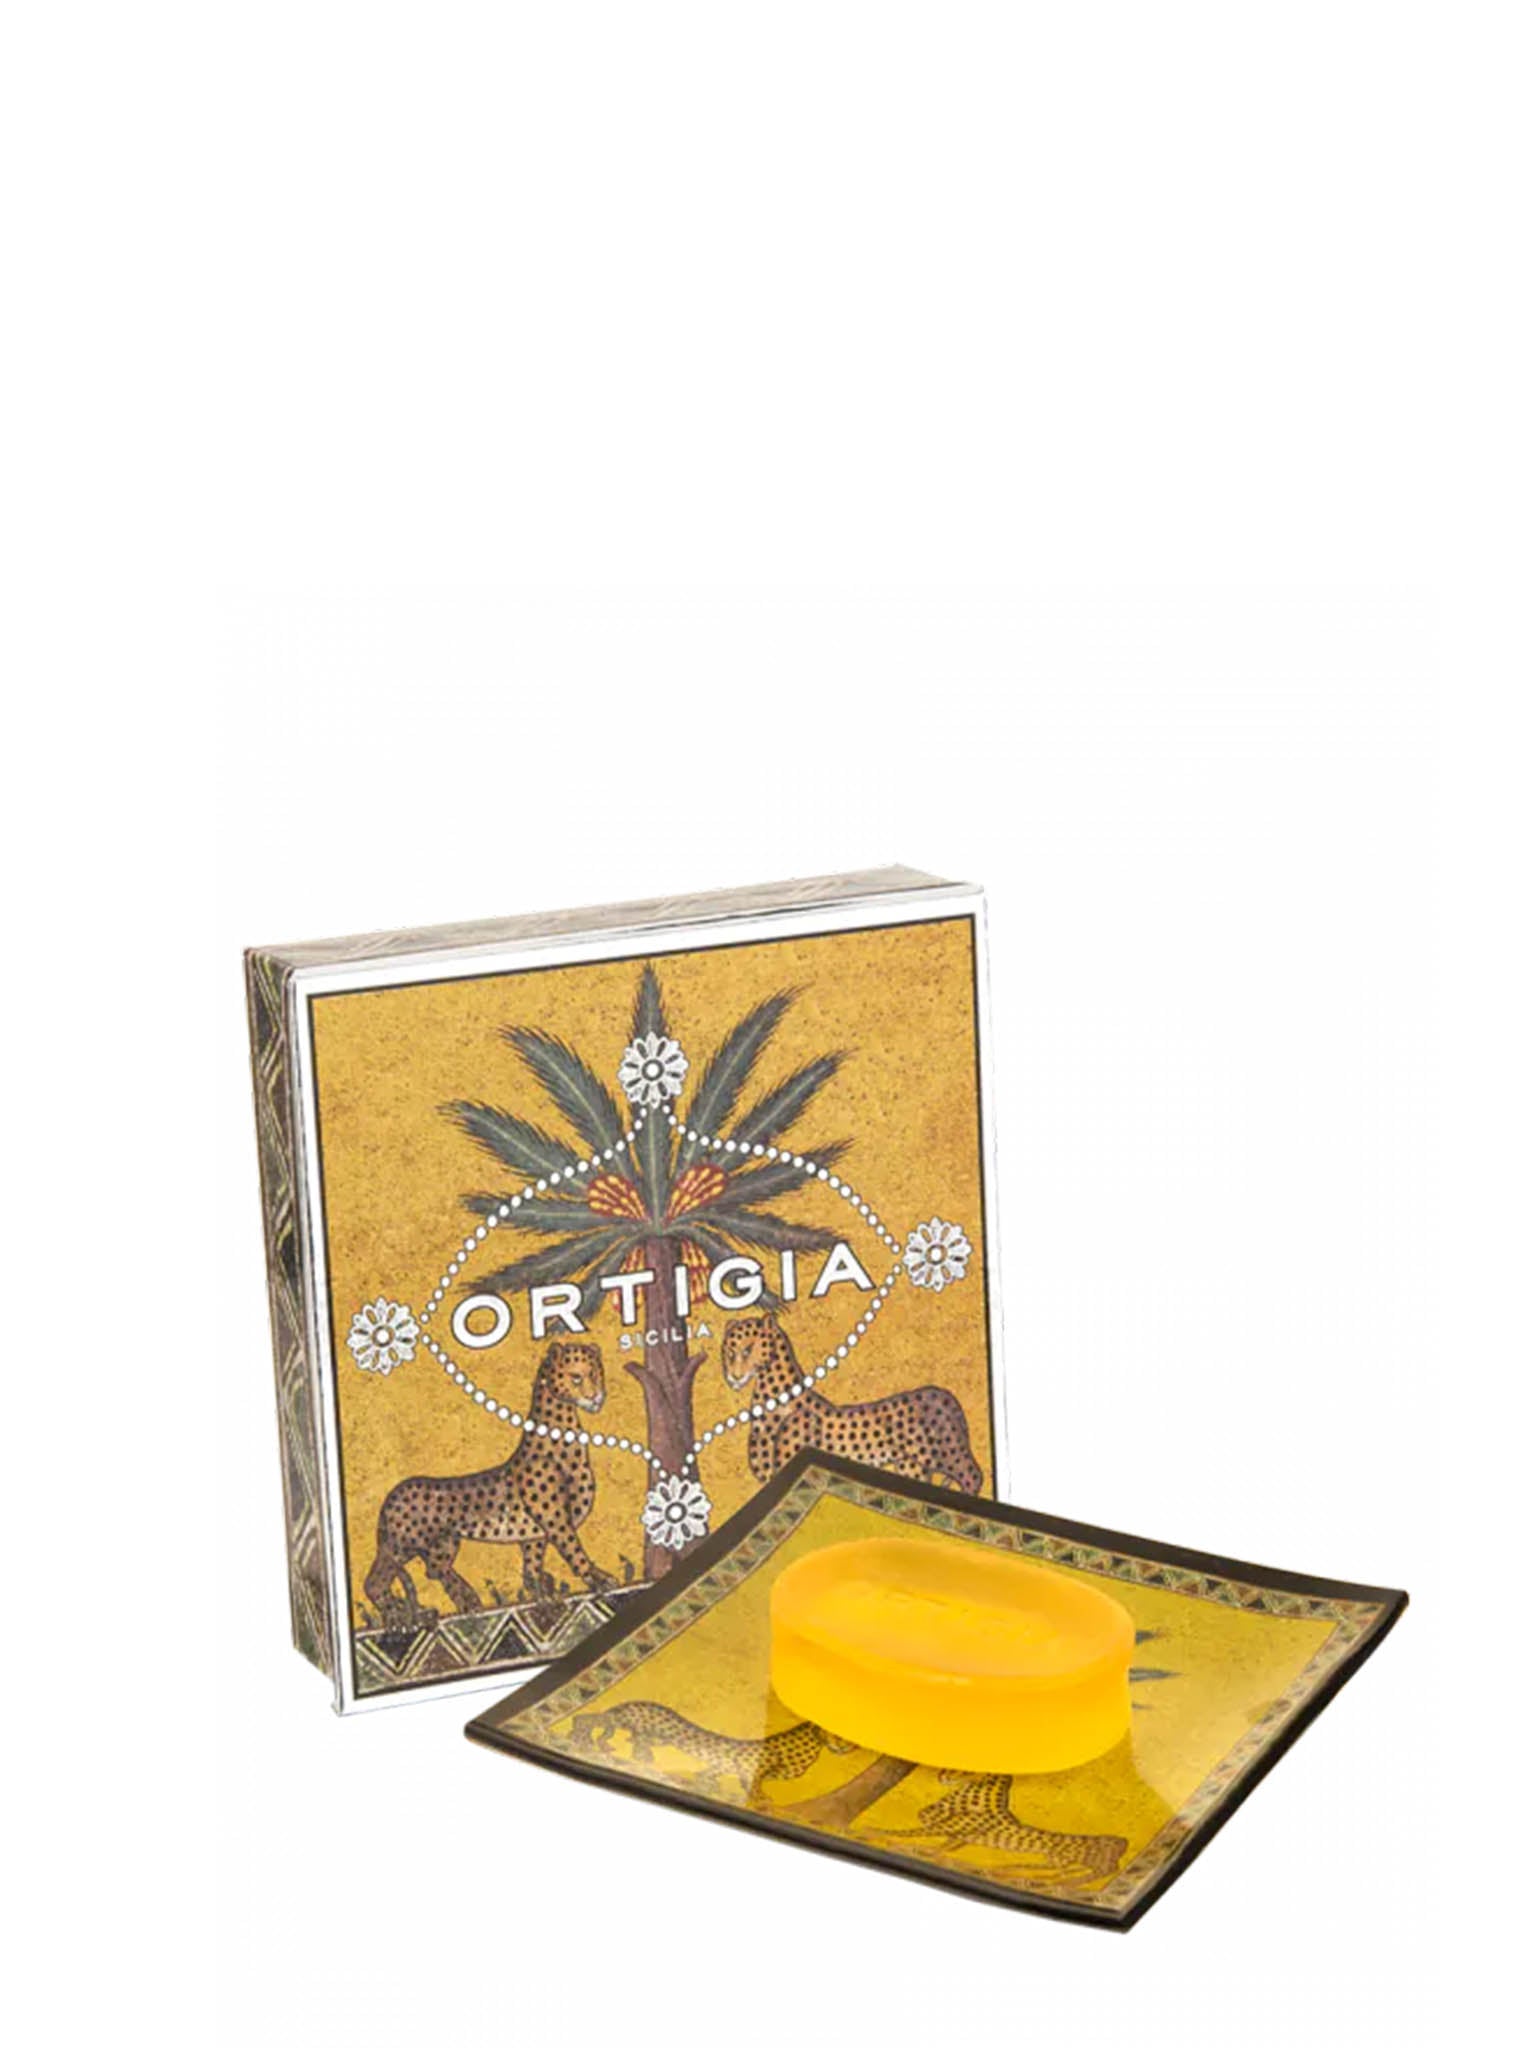 Ortigia Zagara Soap with Glass Dish and packaging cutout